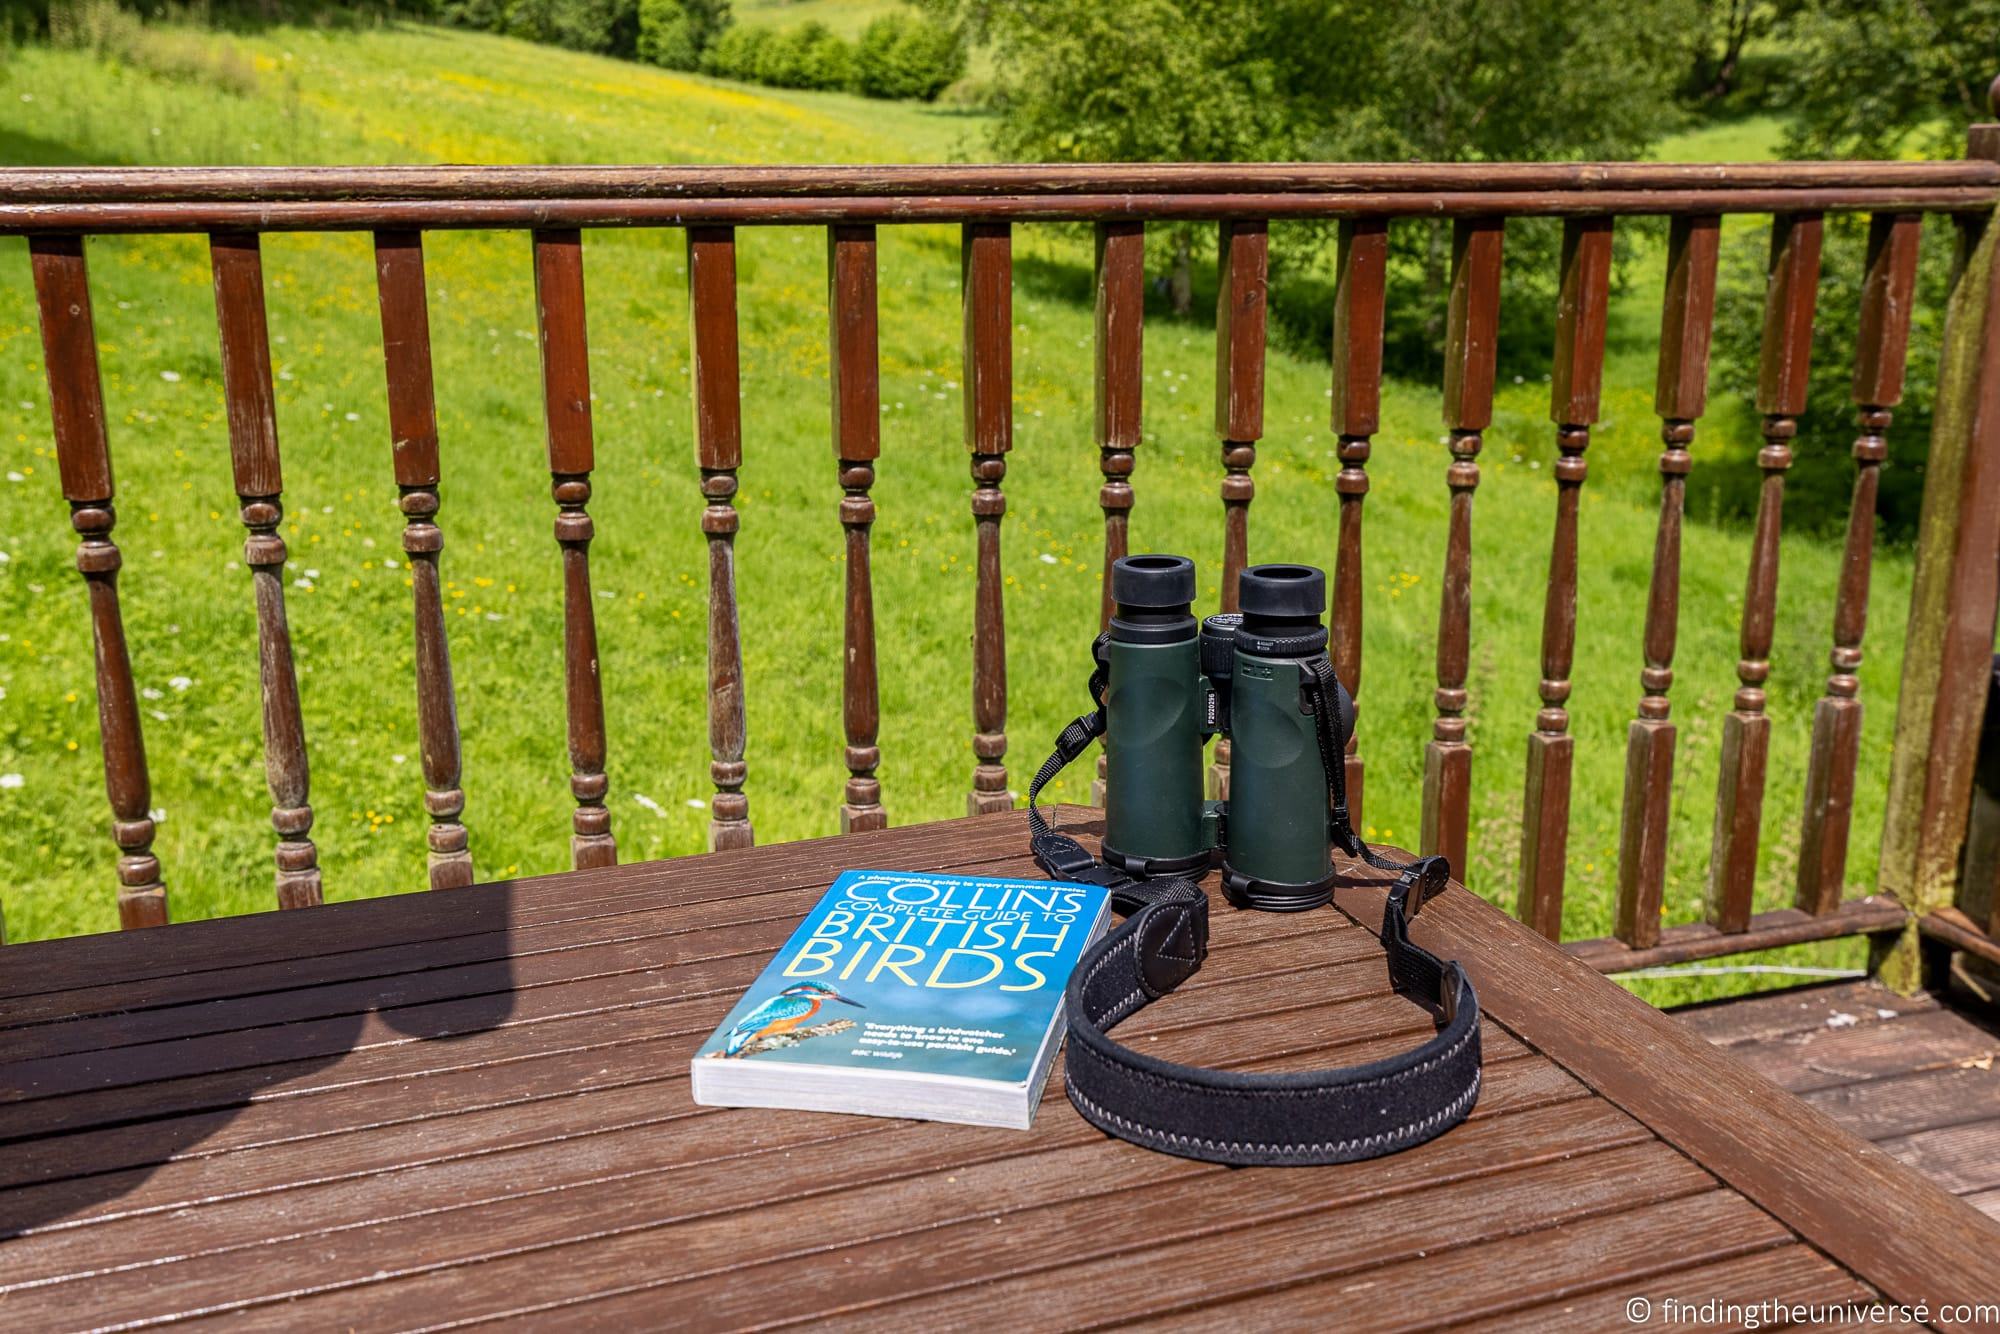 Binoculars and bird book